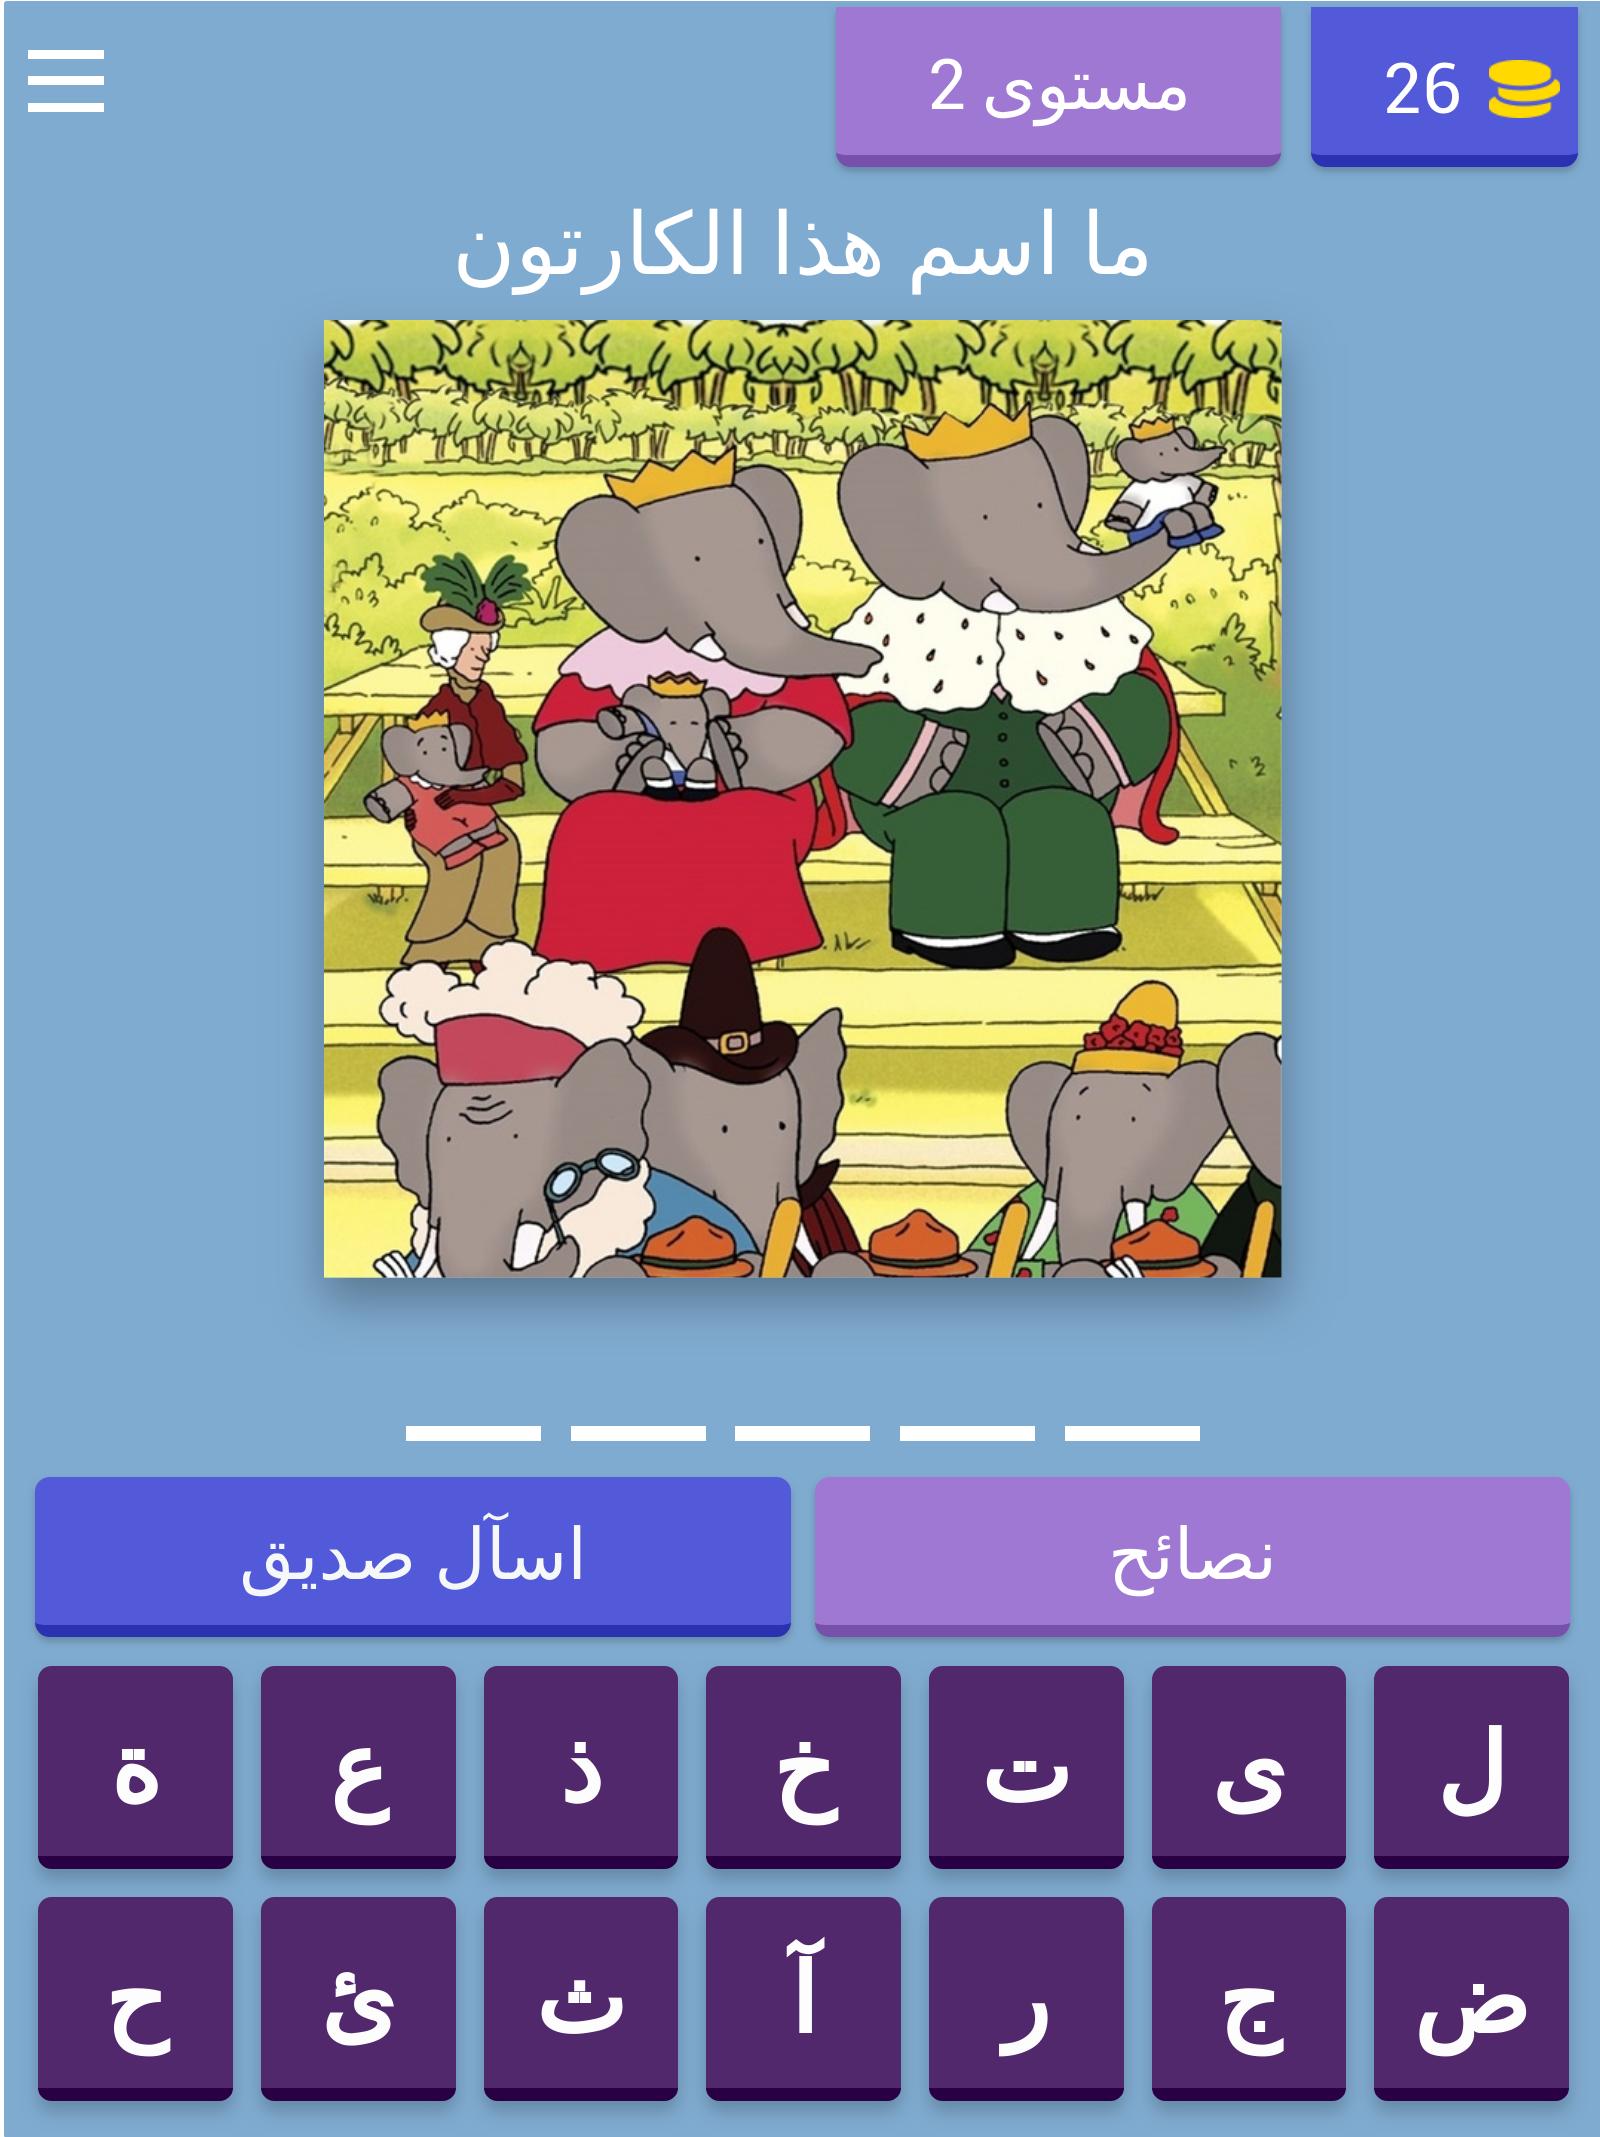 QUIZLOGO - Arabic Toon 8.4.3z Screenshot 10